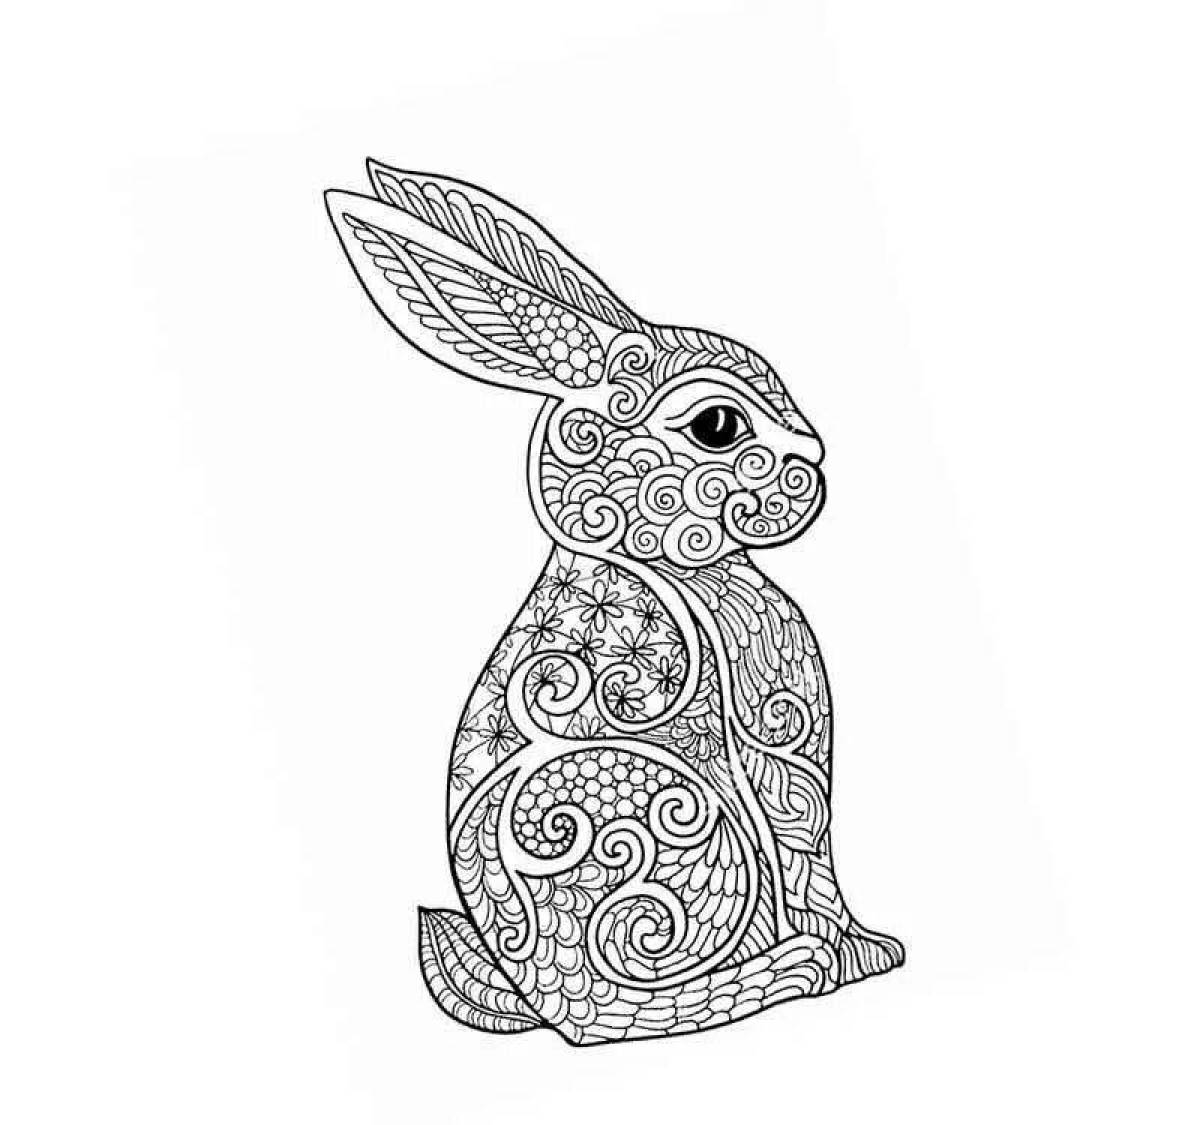 Splendorous antistress hare coloring book